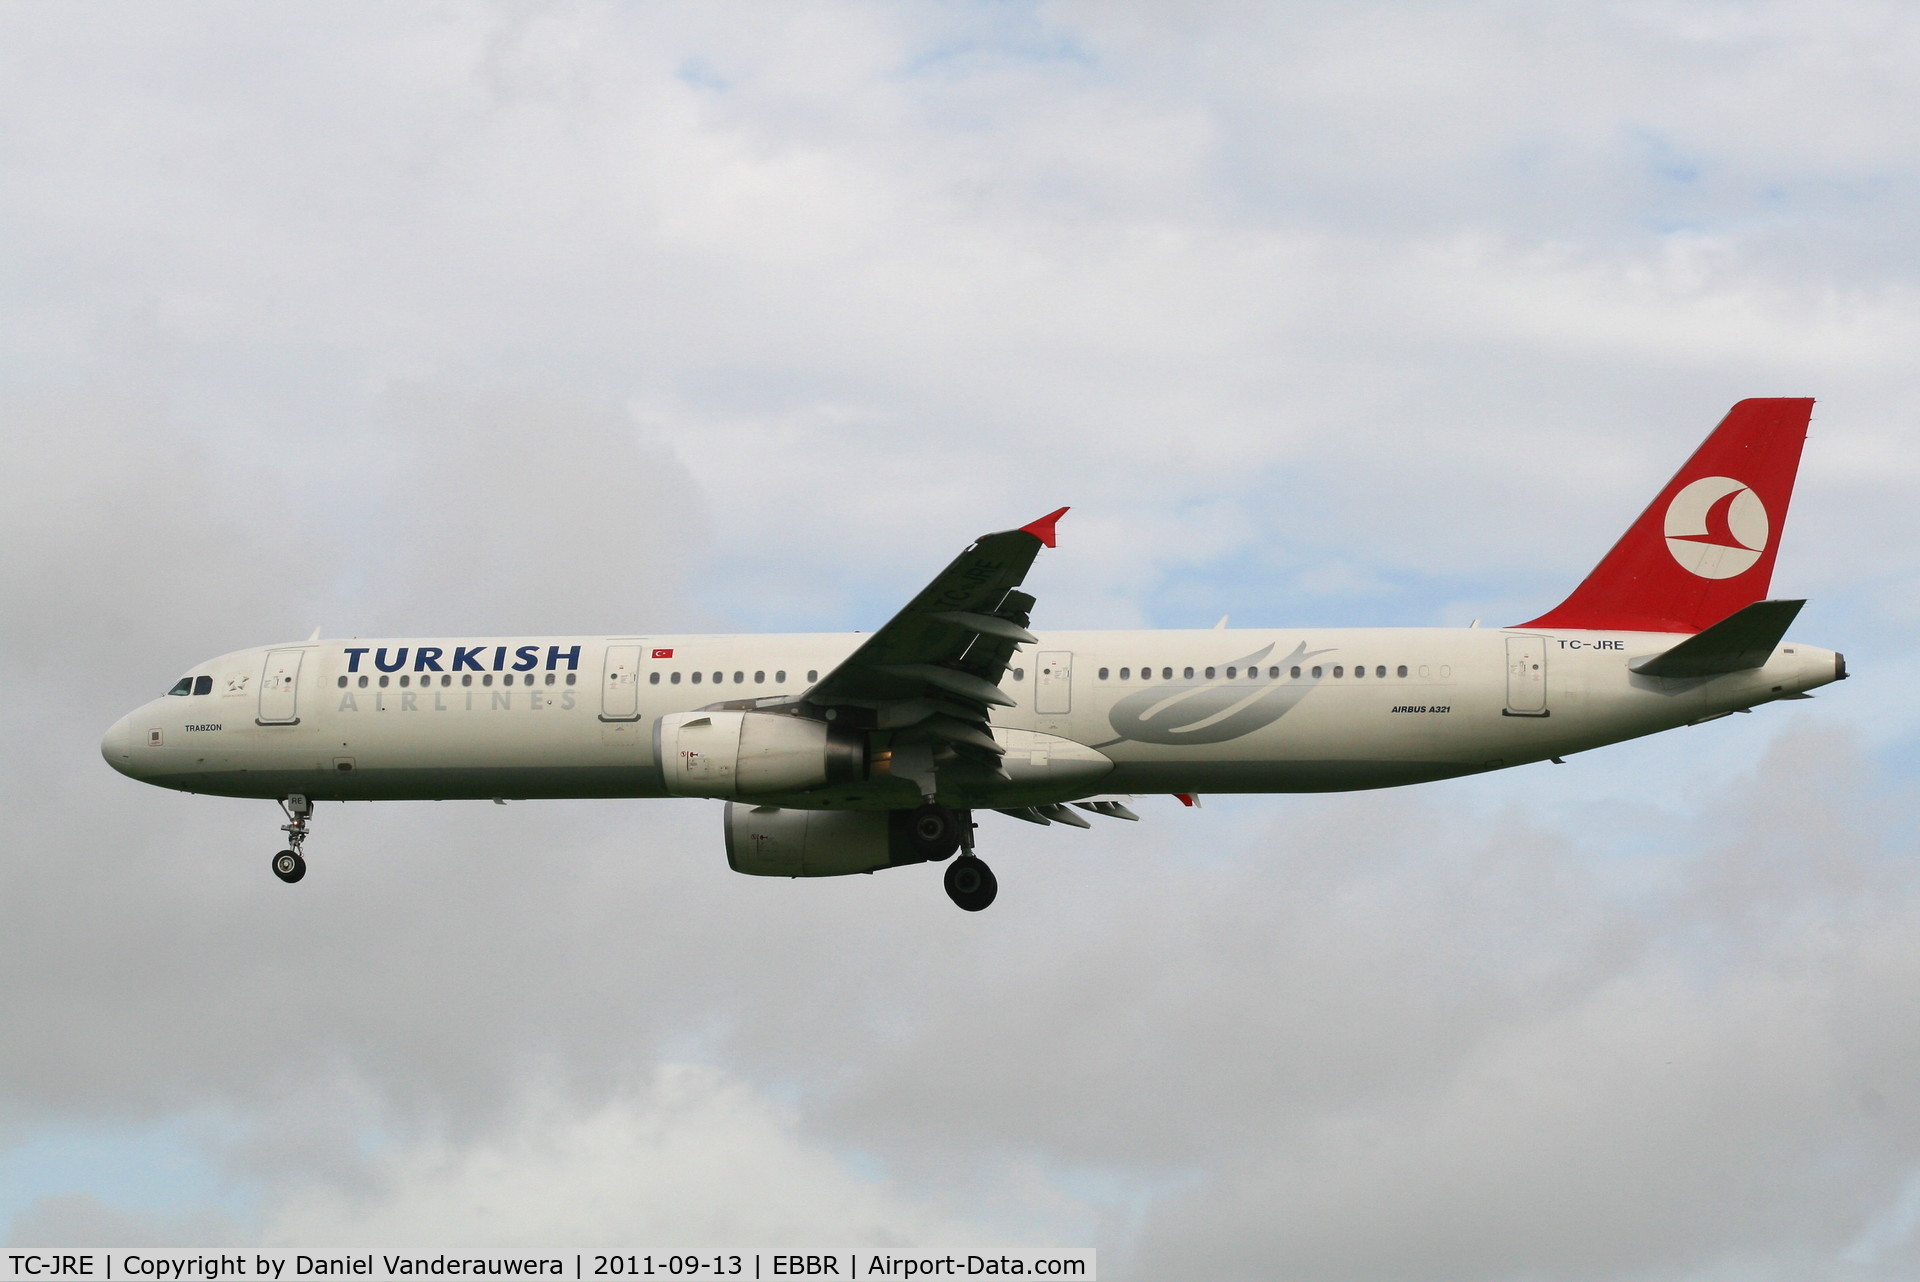 TC-JRE, 2007 Airbus A321-231 C/N 3126, Arrival of flight TK1937 to RWY 25L